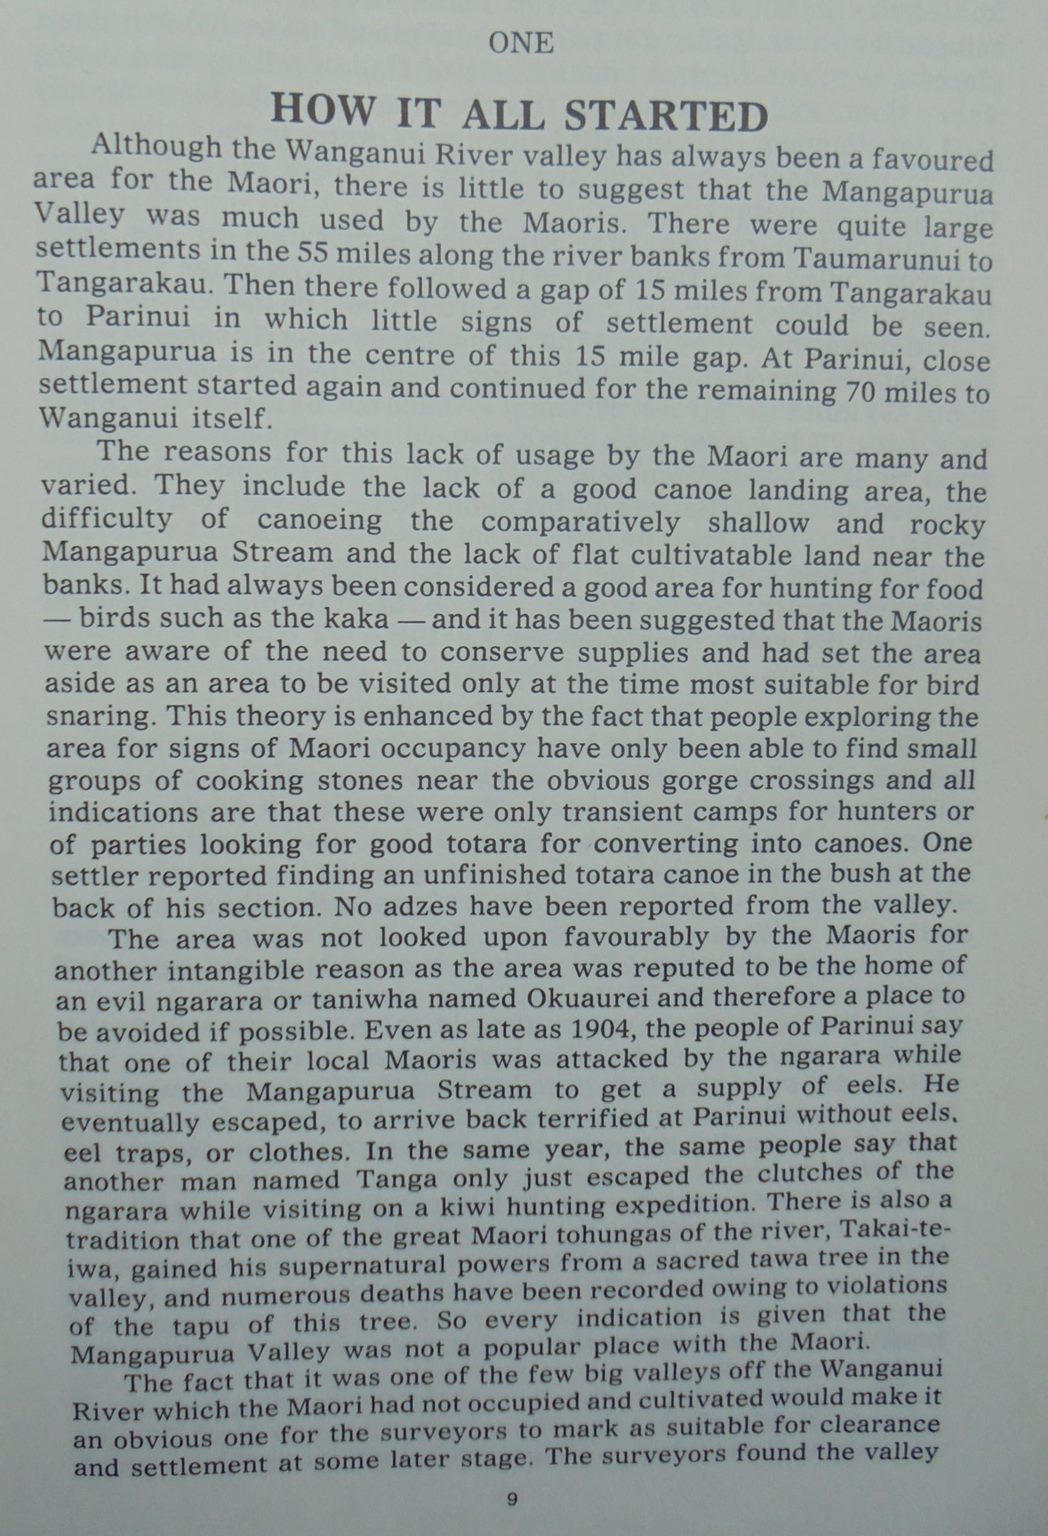 The Bridge to Nowhere The Ill-Fated Mangapurua Settlement by Arthur P. Bates.